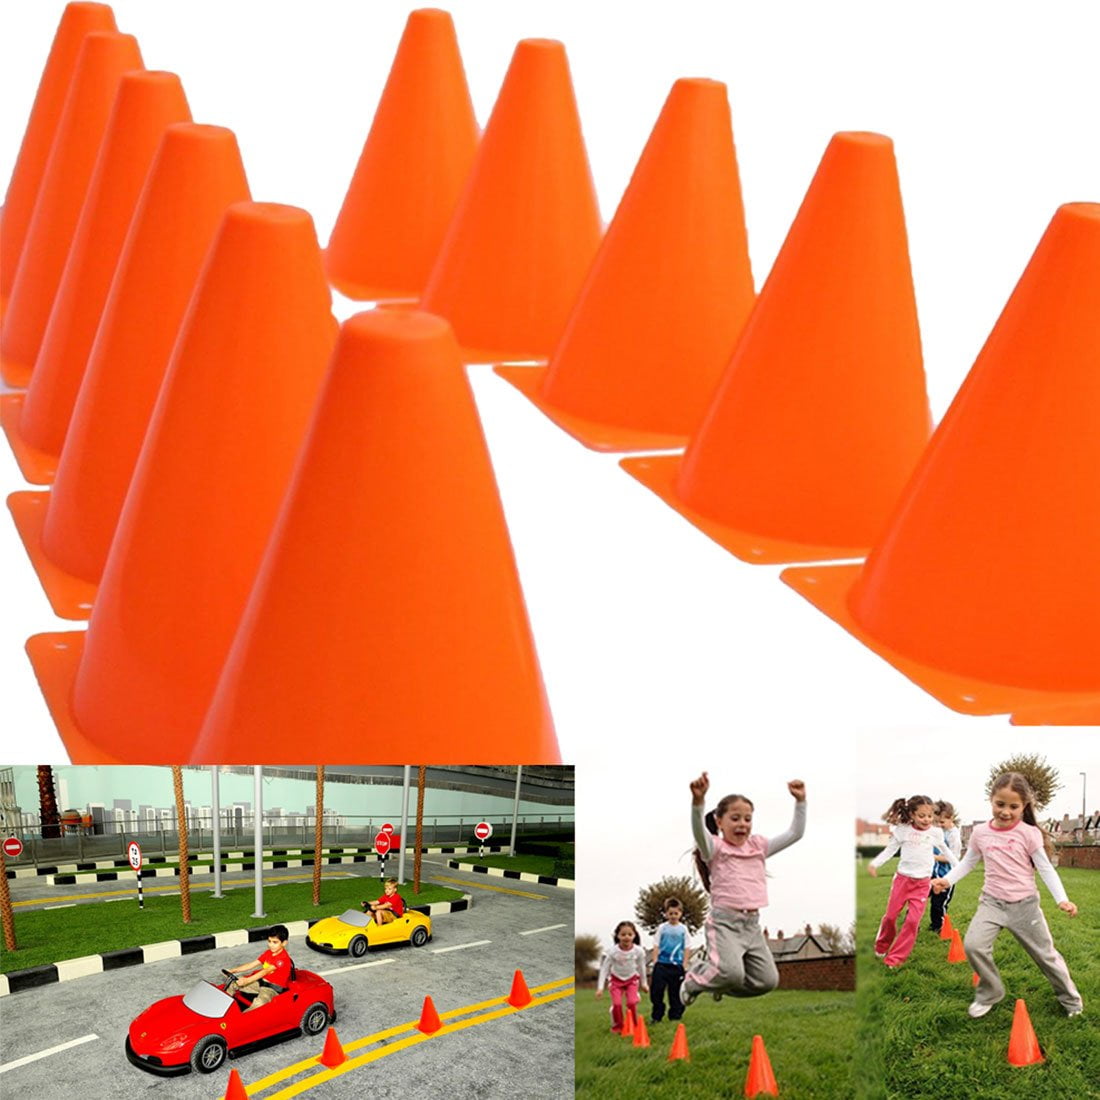 jojofuny 30 Pieces Mini Traffic Cones Kids Toy Plastic Traffic Cones Sports Training Roadblock Toy Model DIY Sand Table Ornaments Children Educational Learning Toy